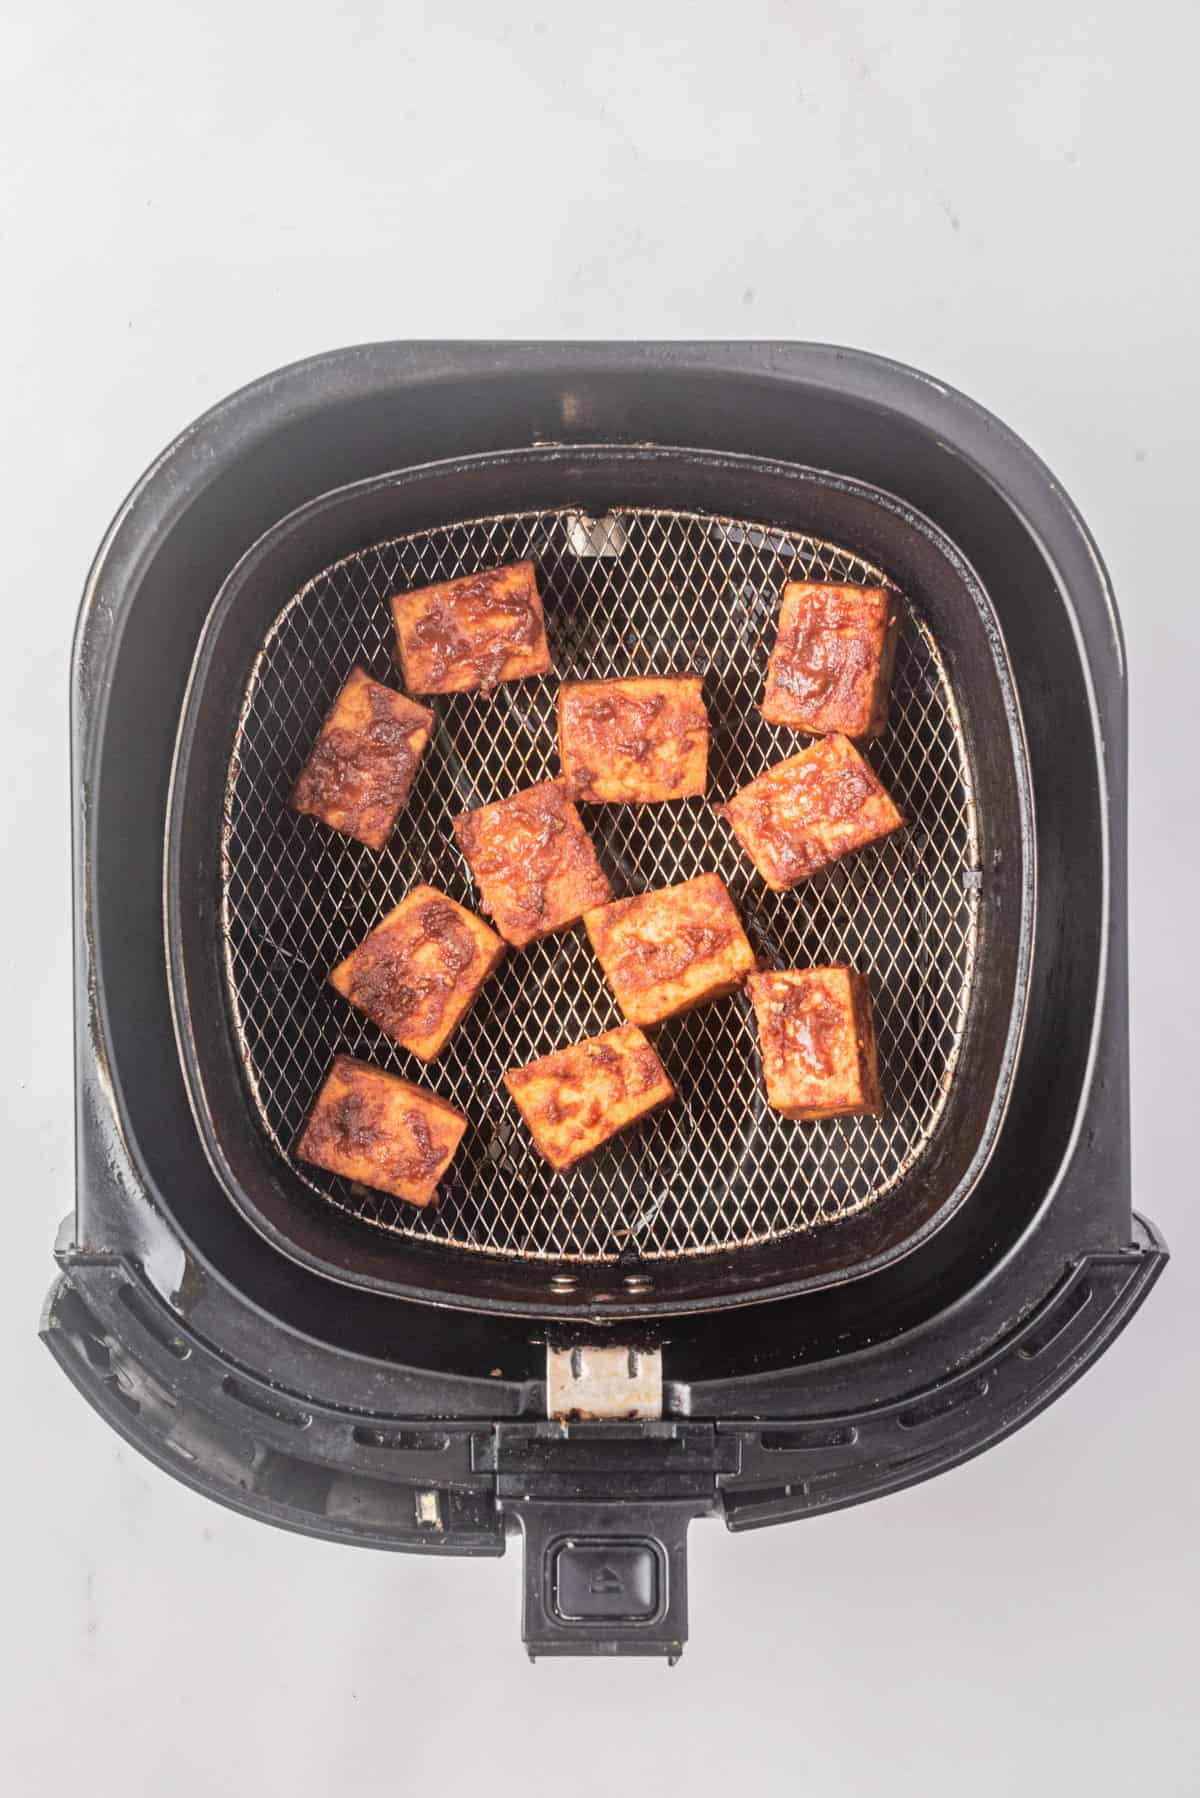 An overhead image of gochujang sauce-coated tofu in an air fryer.